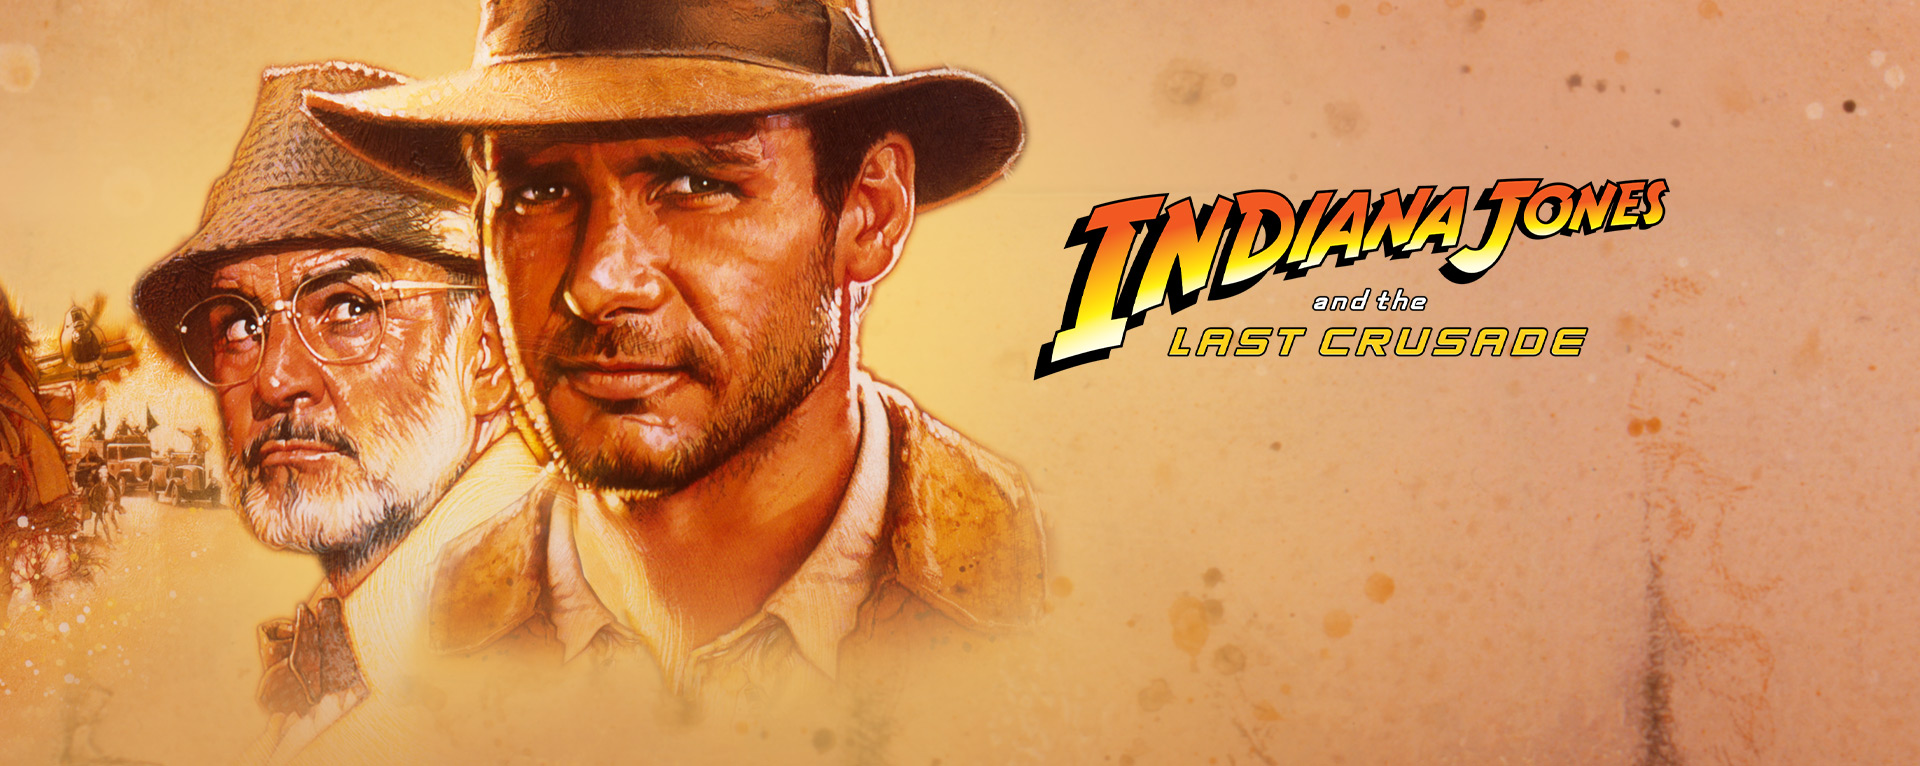 Indiana Jones Disney Plus TV Series In Early Works At Lucasfilm